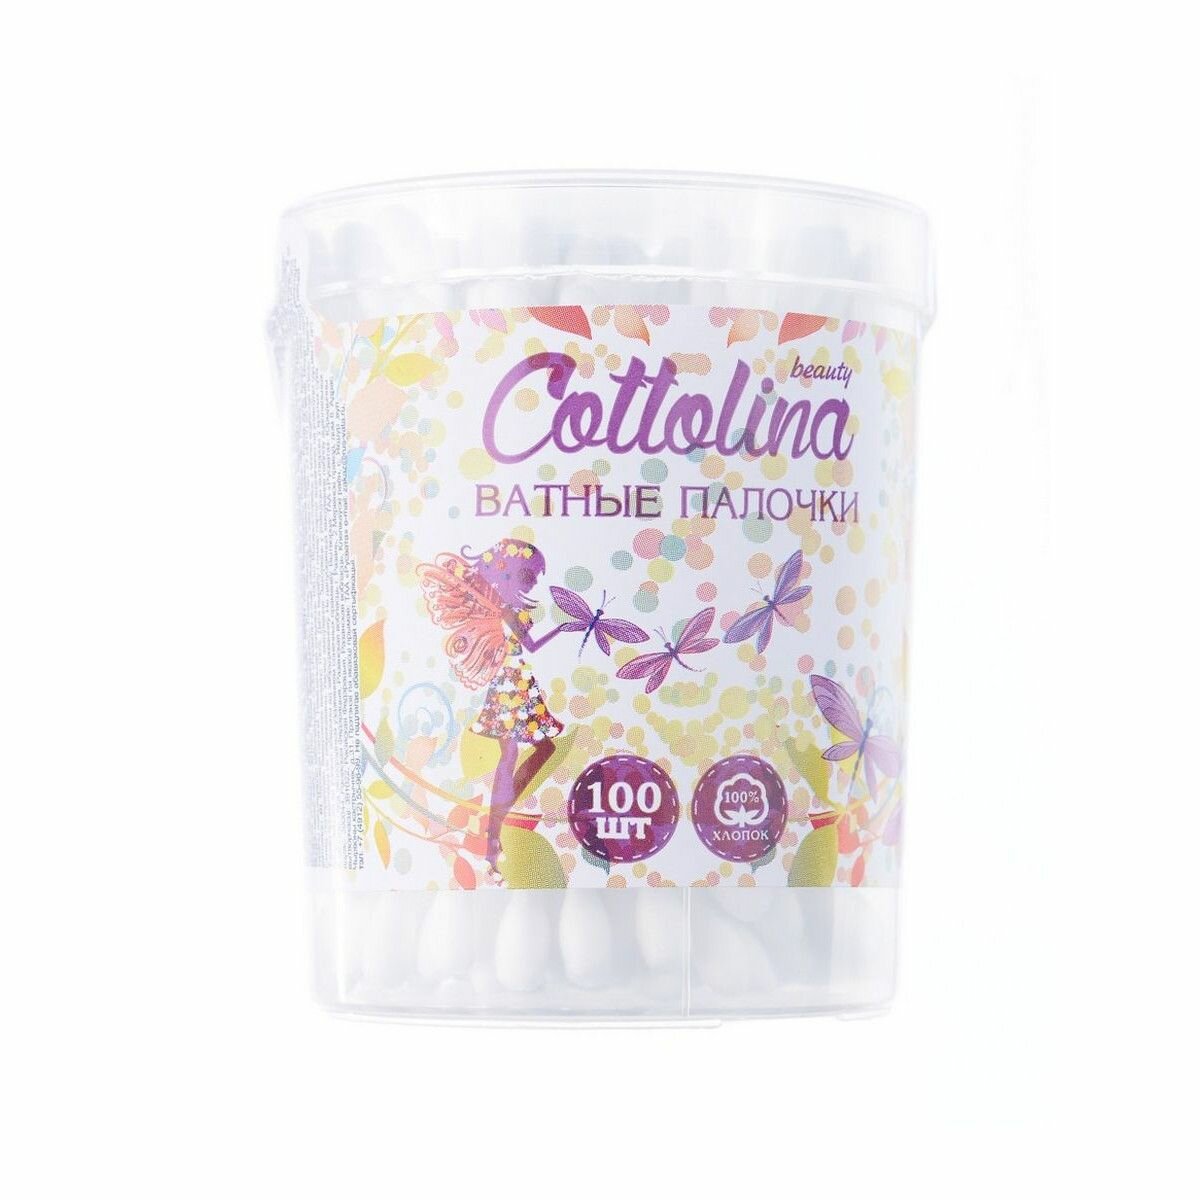 Ватные палочки Cottolina 100шт, 3 упаковки